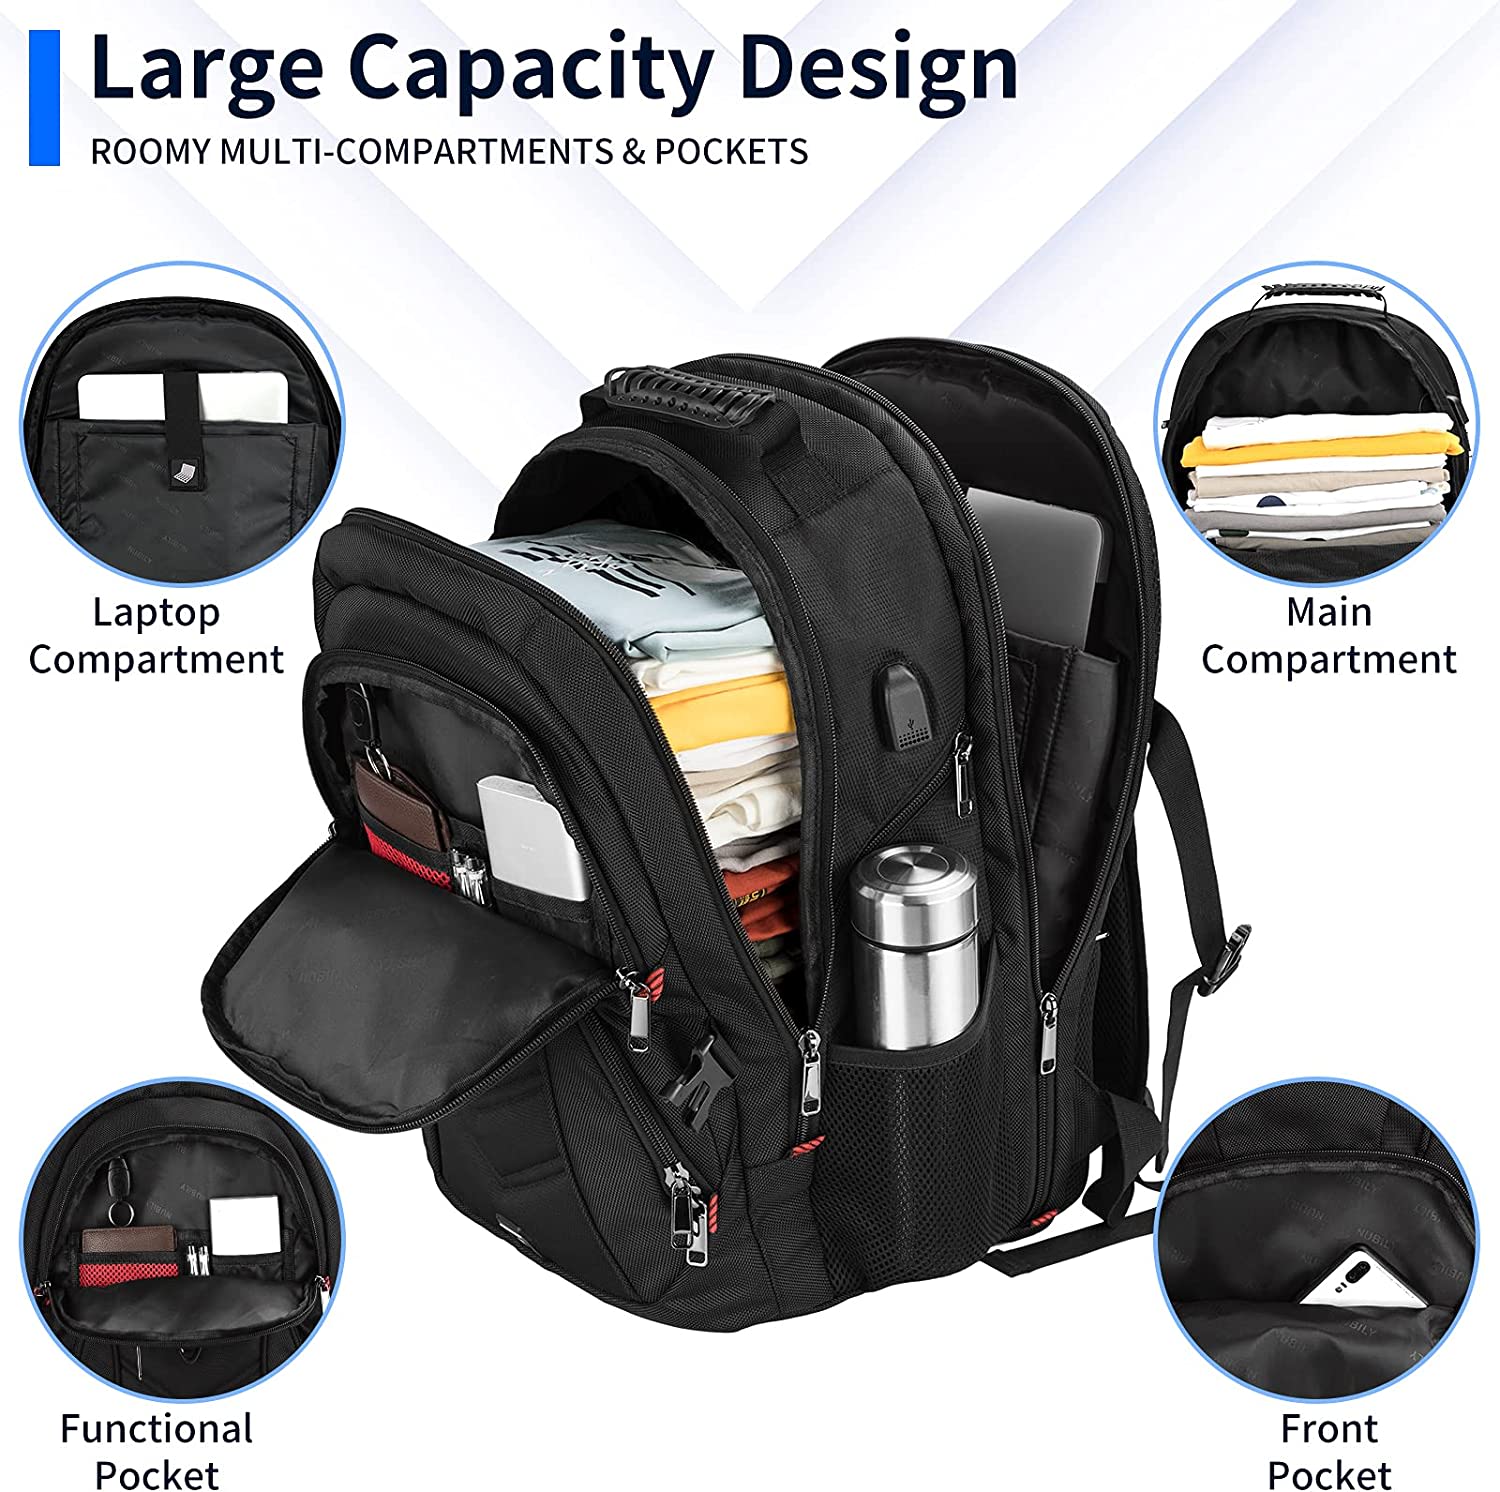 NUBILY Laptop Backpack 17 inch Waterproof Extra Large TSA Backpack for Women Men 45L Grey Green, Men's, Size: 17.3